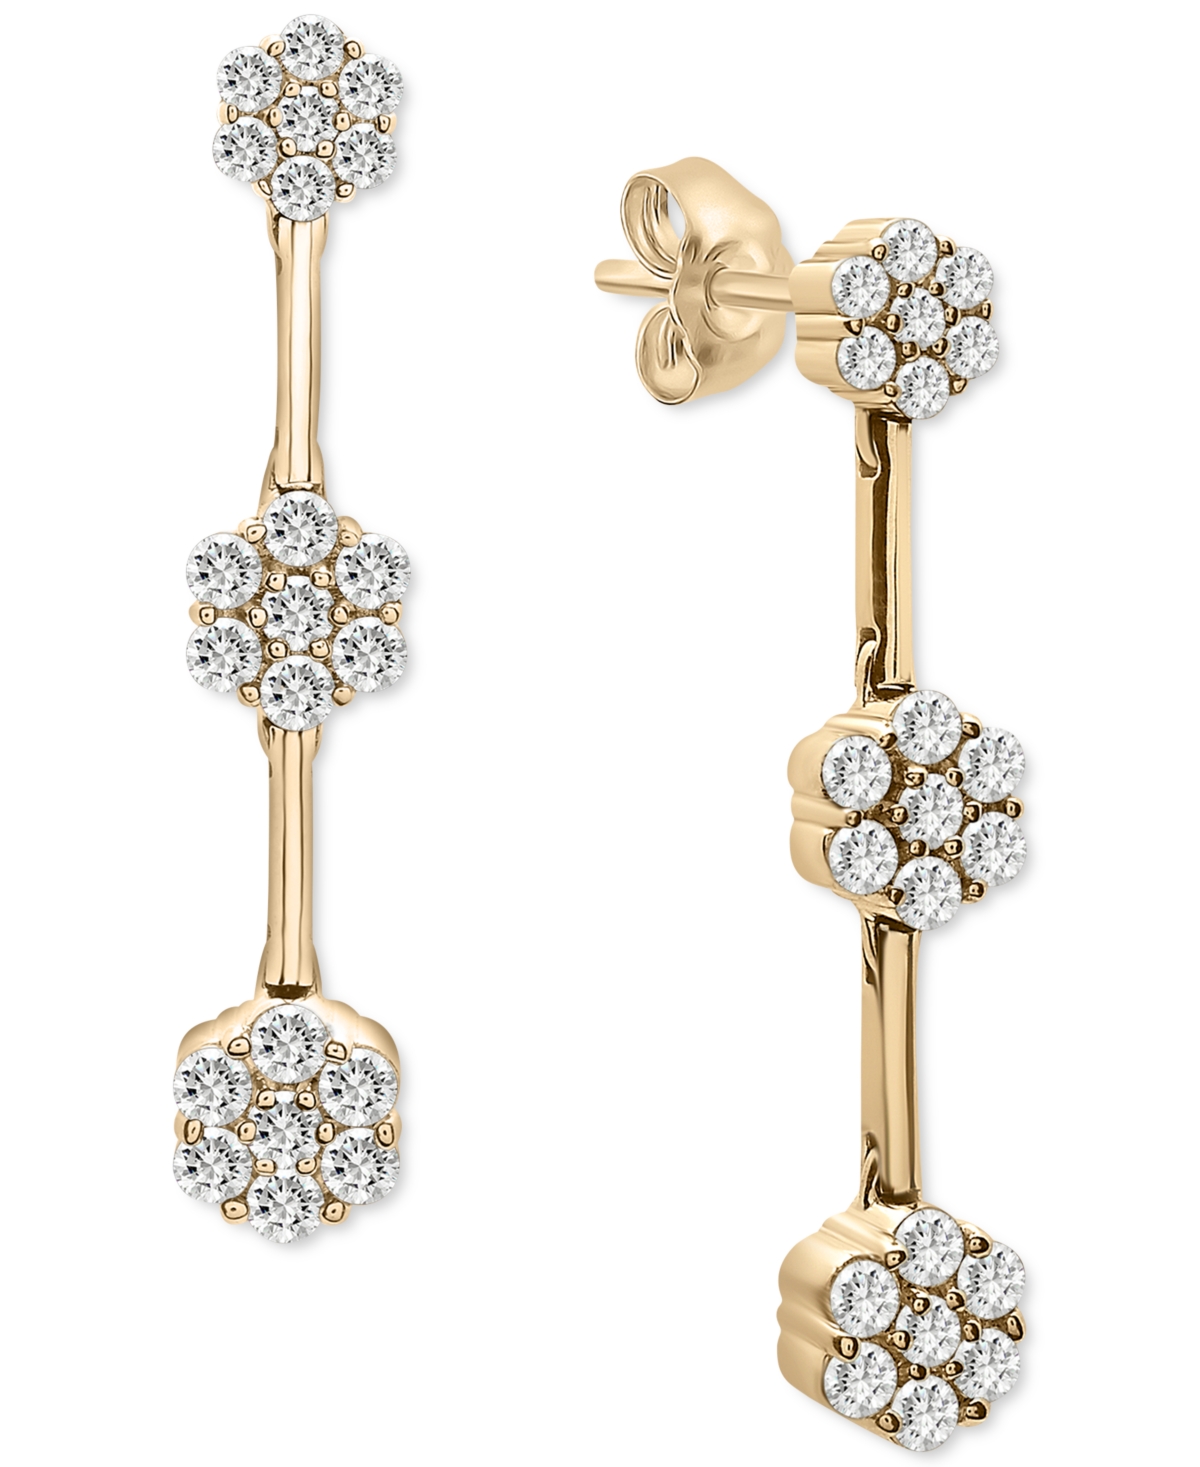 Diamond Triple Flower Cluster Drop Earrings (1-1/2 ct. t.w.) in 14k Gold, Created for Macy's - Yellow Gold